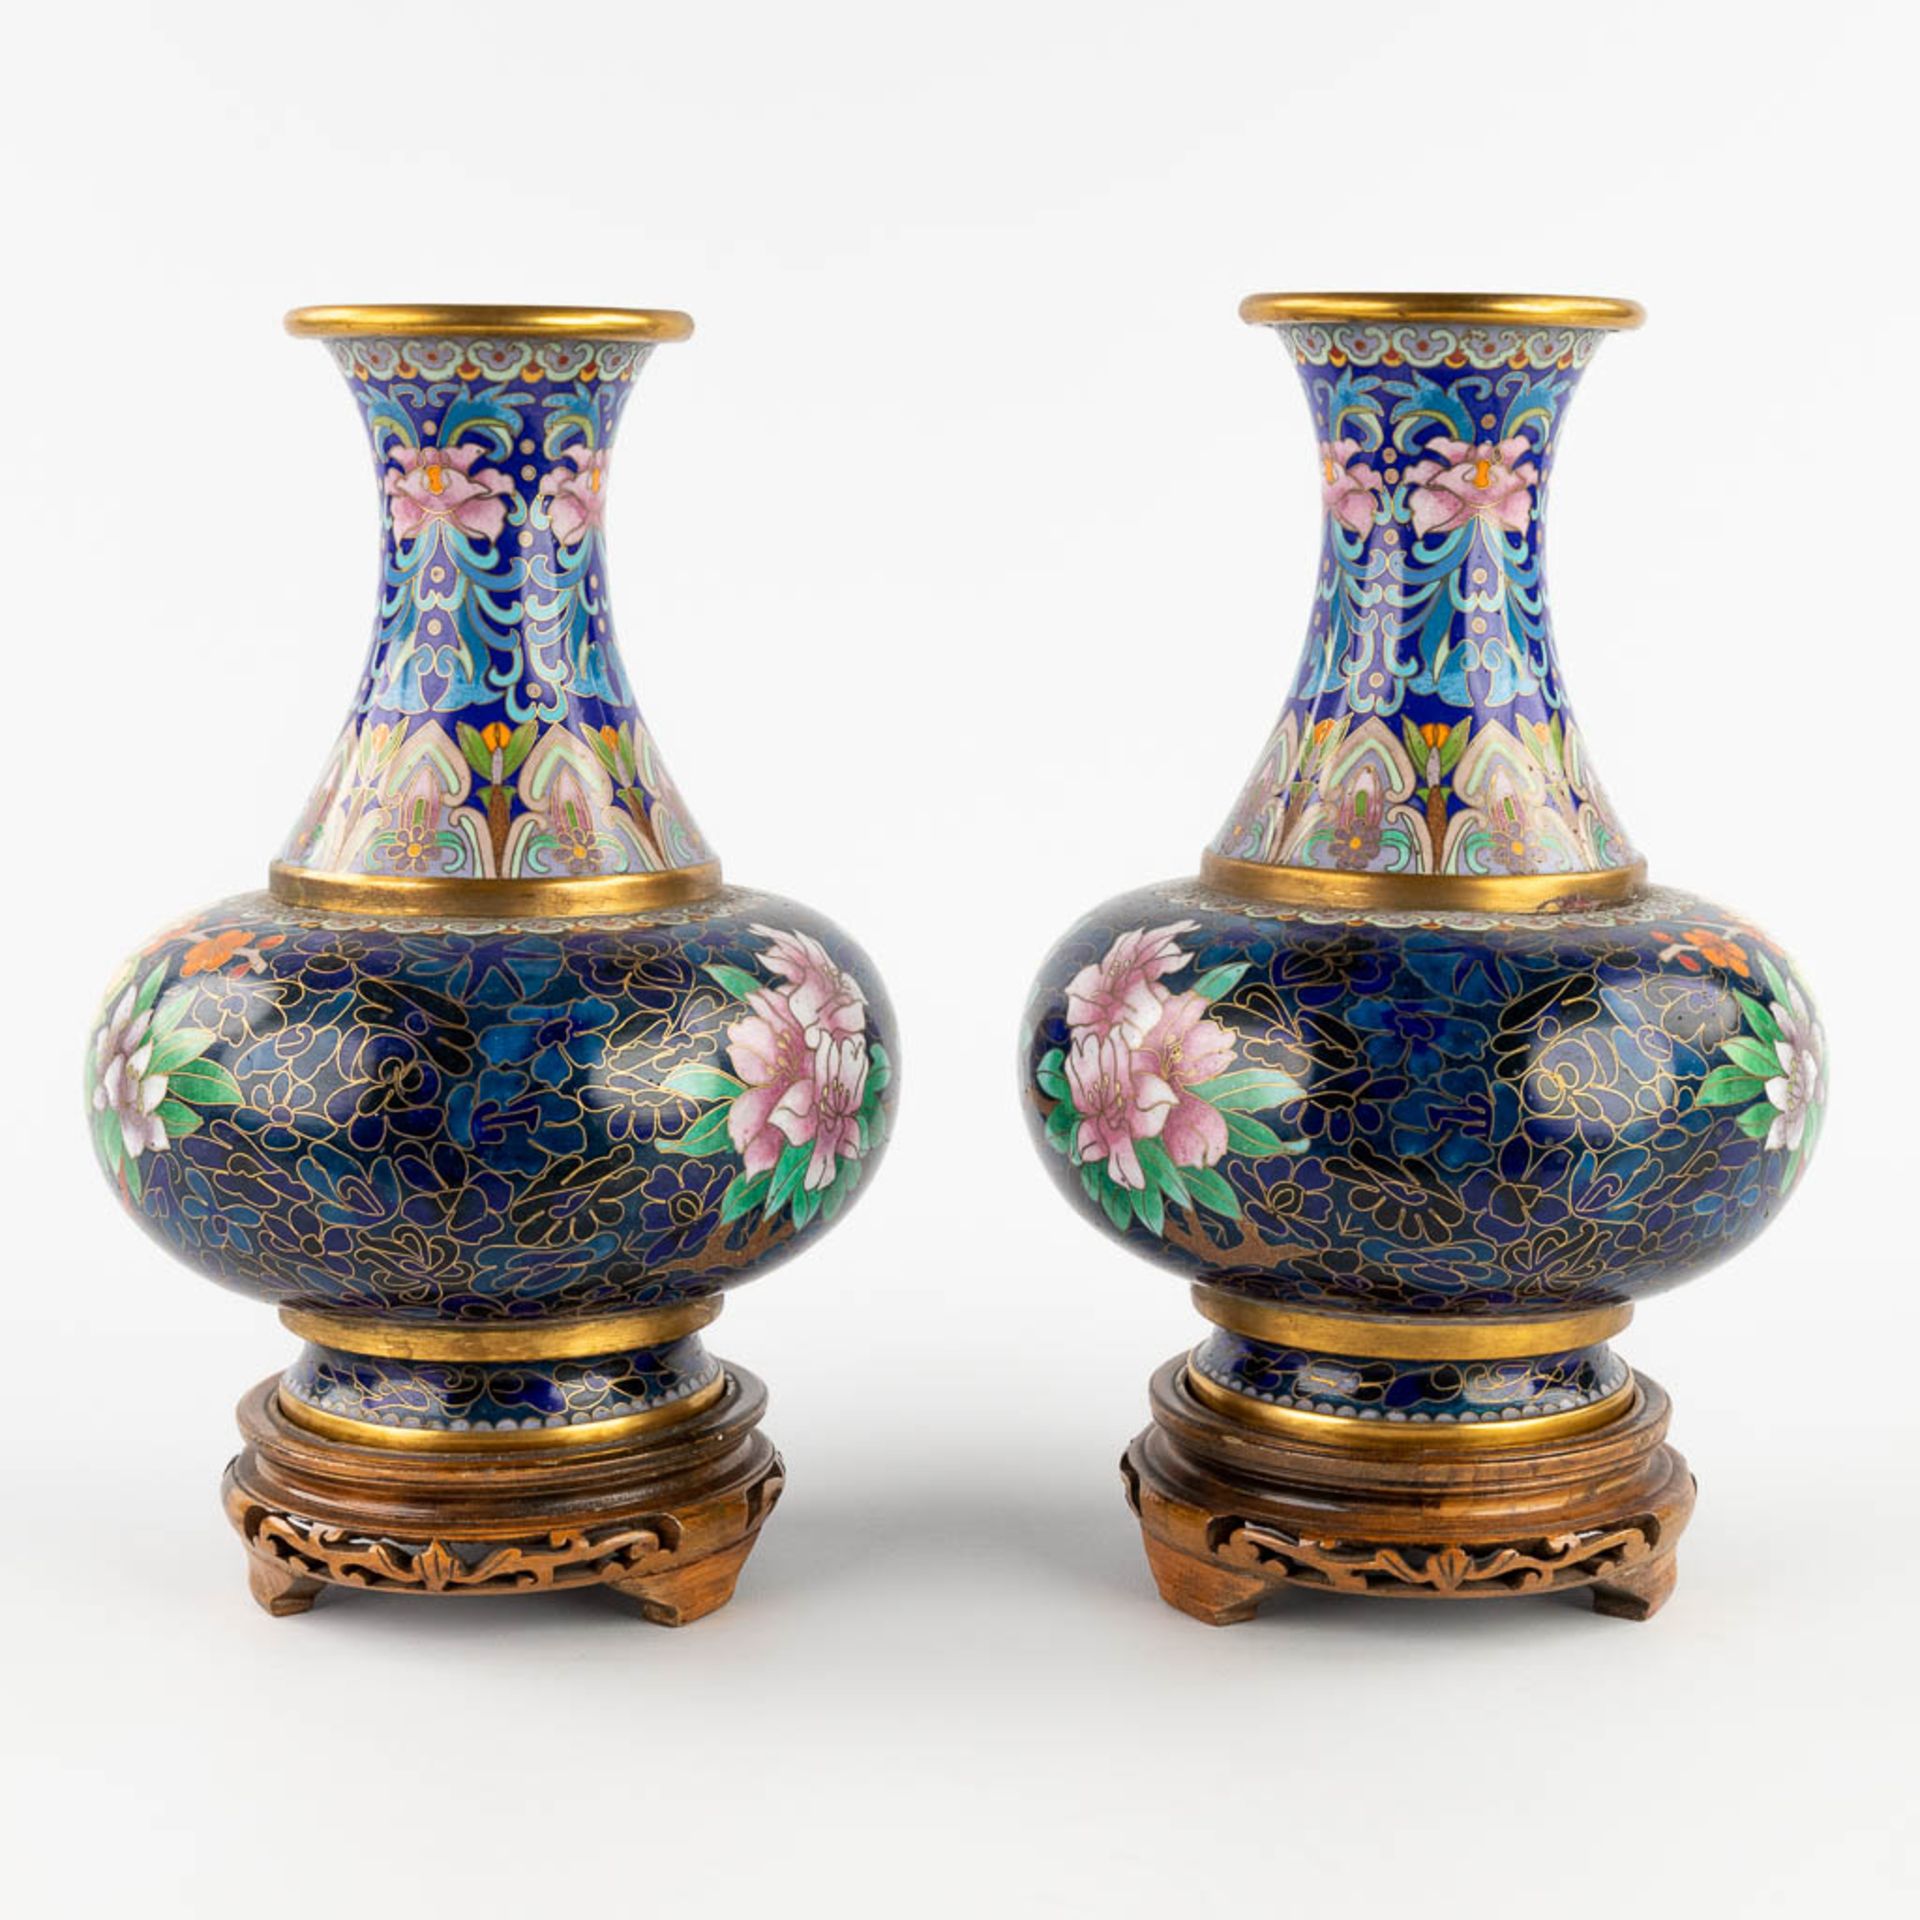 A pair of vases with a flower decor, cloisonné decor. 20th C. (W:18 x H:26 cm) - Image 7 of 13